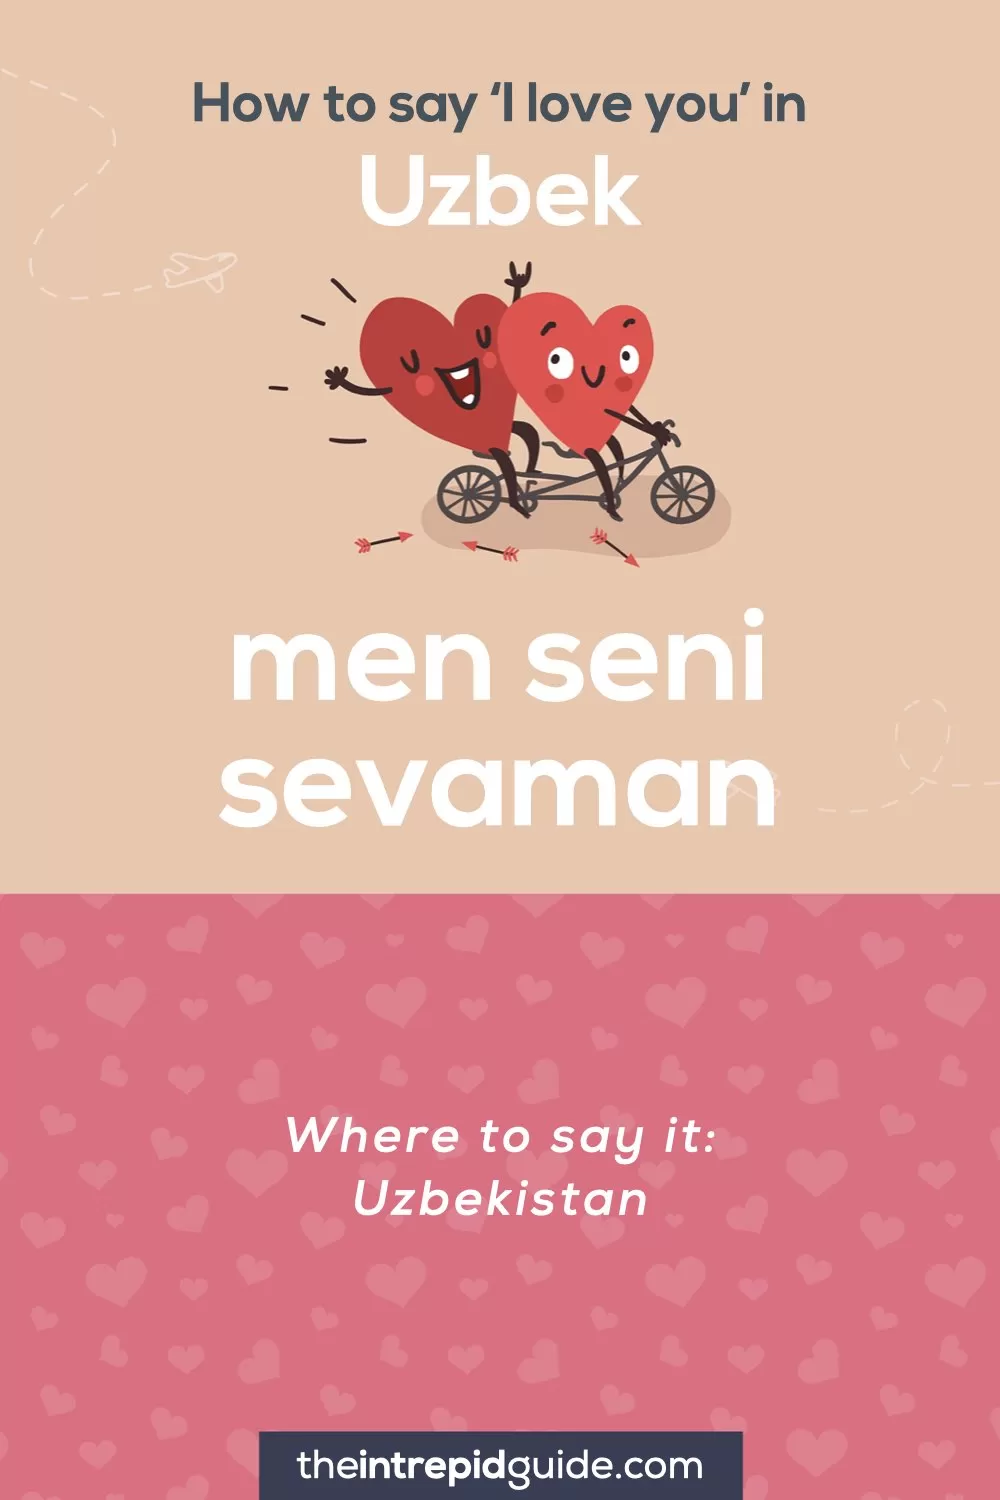 How to say I love you in different languages - Uzbek - men seni sevaman